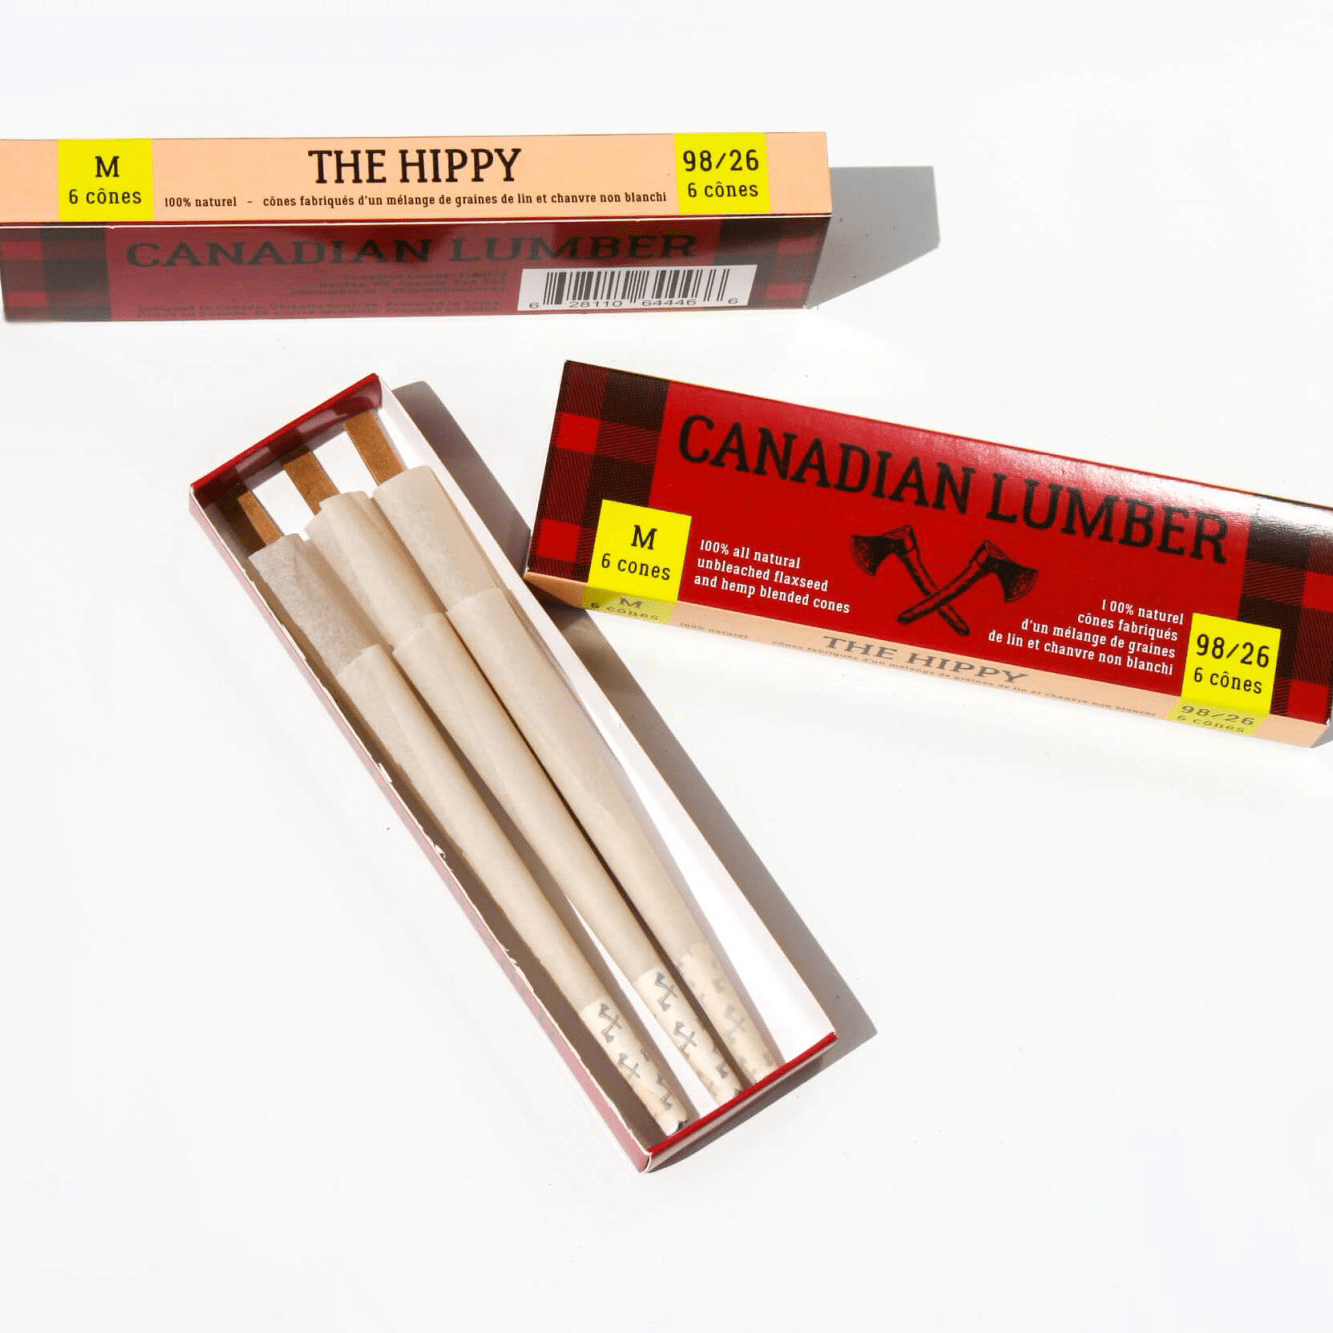 Canadian Lumber Each Cones